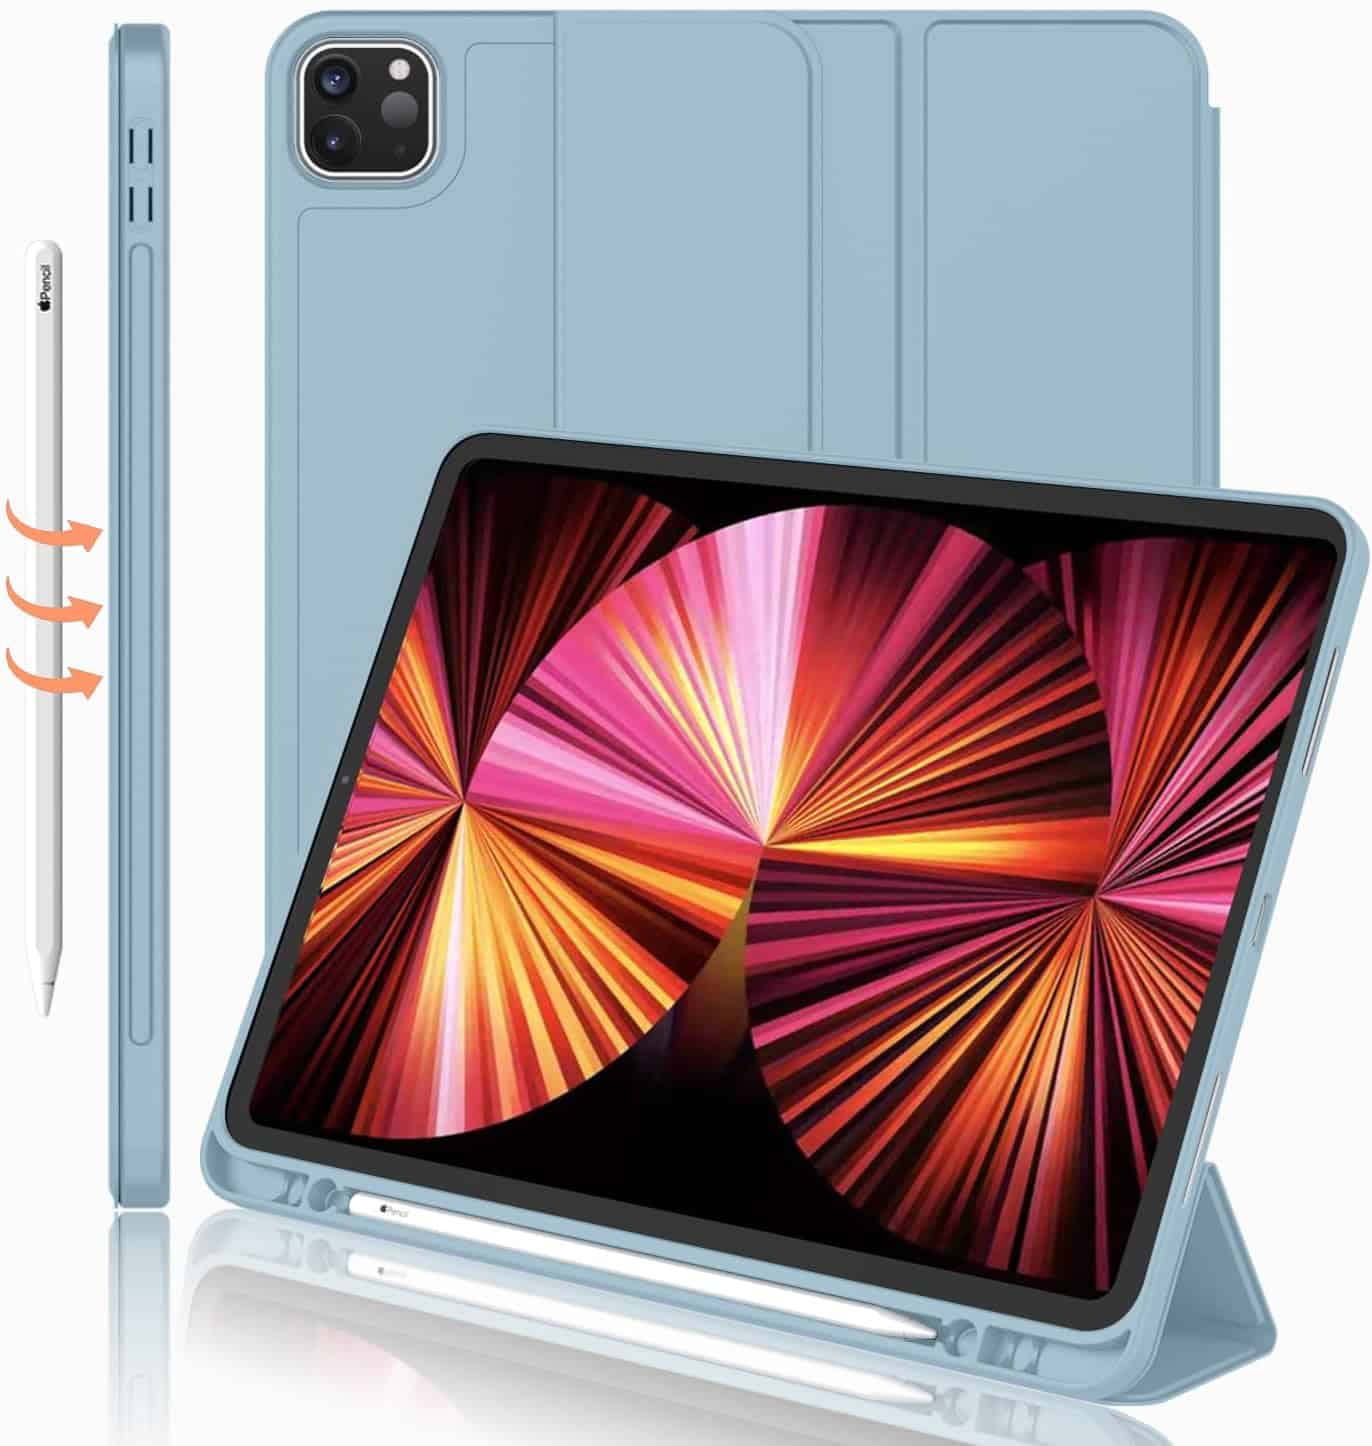 Funda Con Tapa Smart Y Slot Lapiz Para iPad 10.2 7/8+ Vidrio